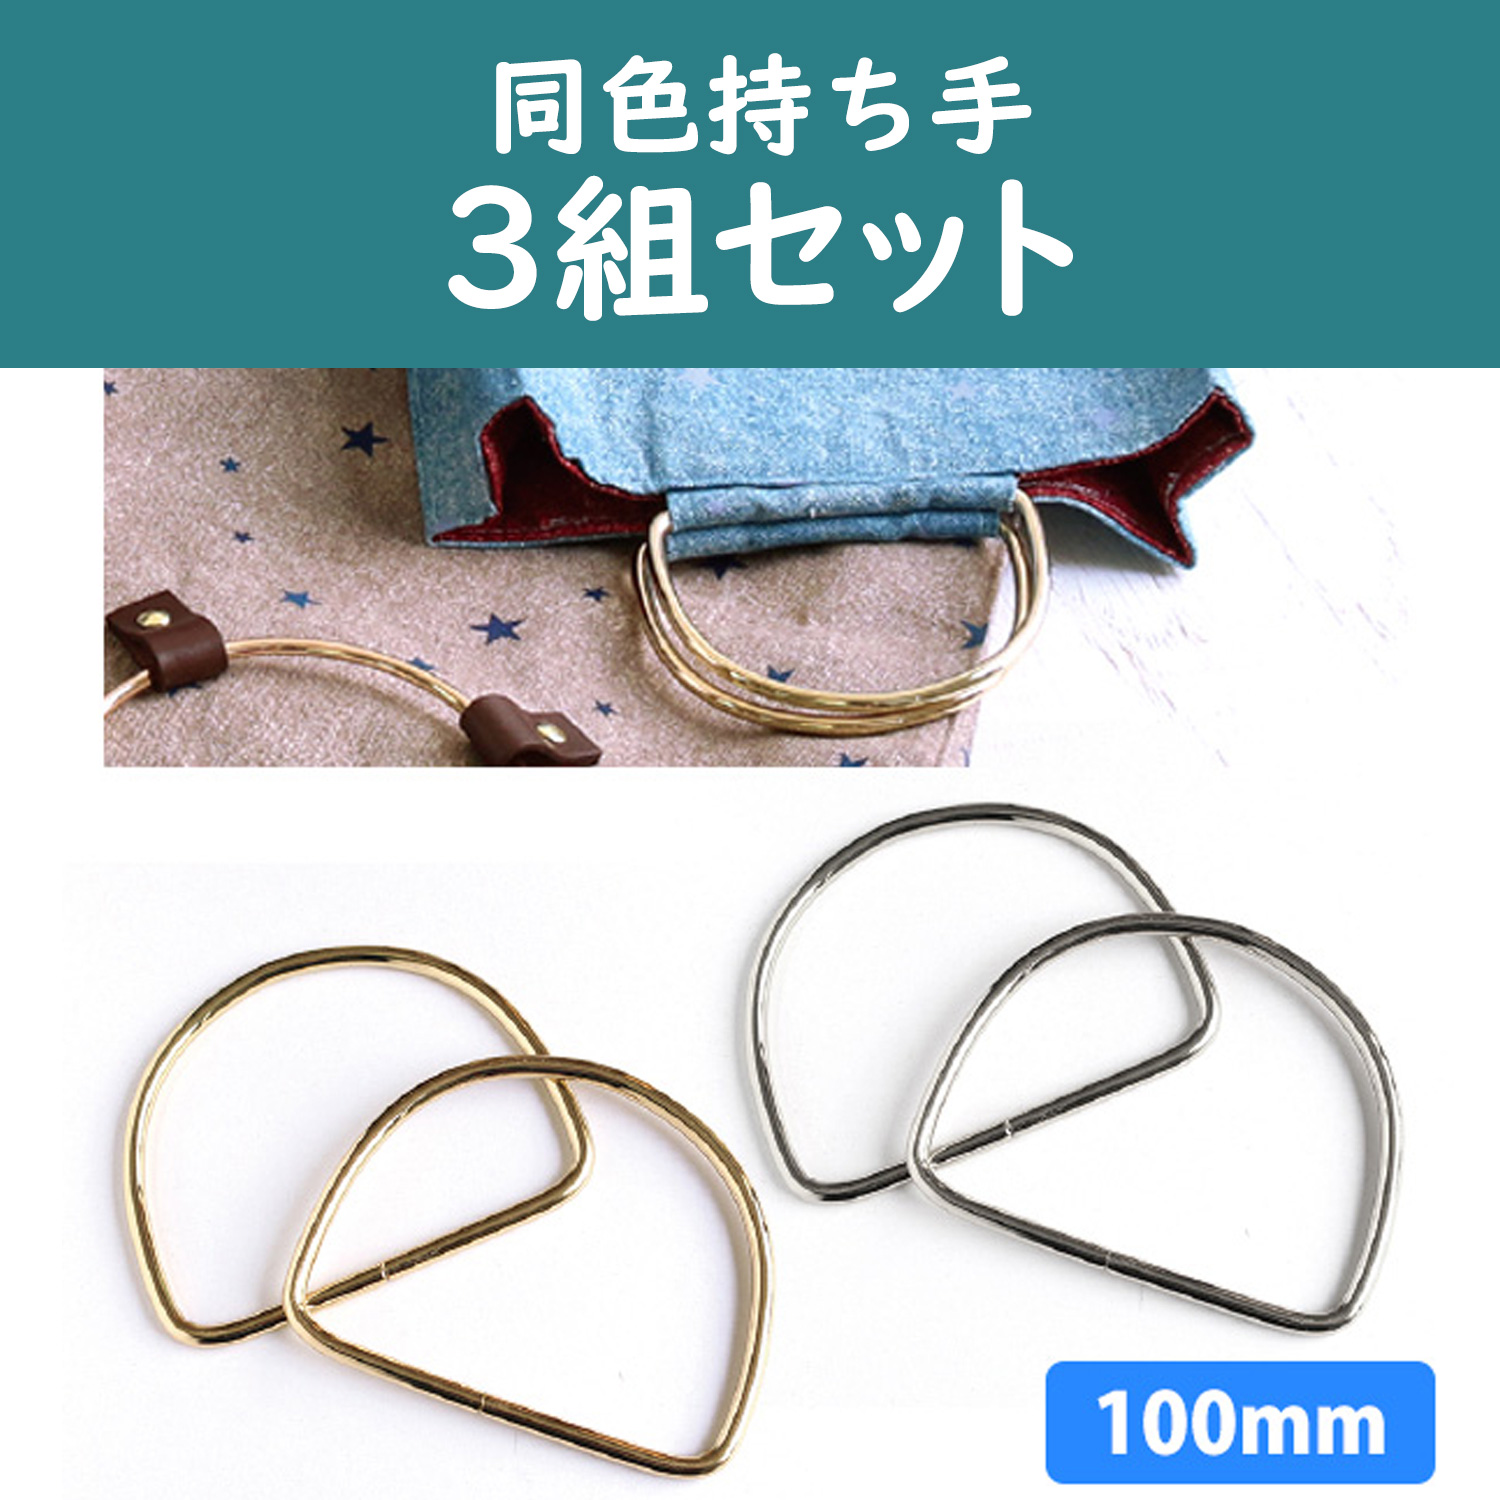 SGM-DH100-3SET Ring Purse Handle D-shaped 100mm 2pcs/bag Same color 5 bag set (set)